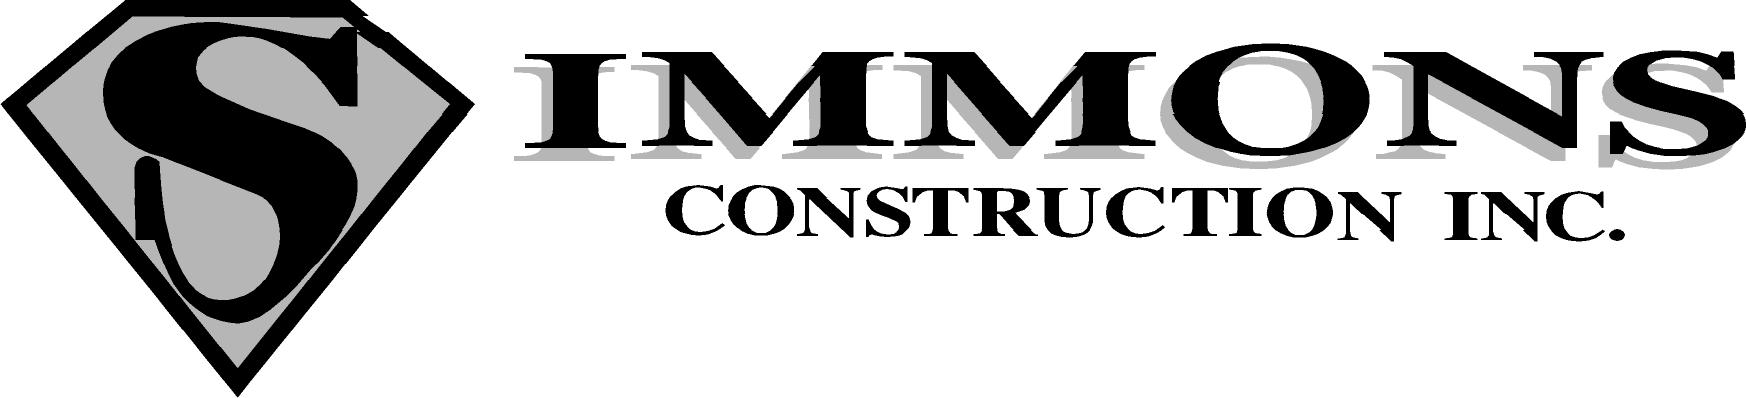 Simmons Construction Inc.